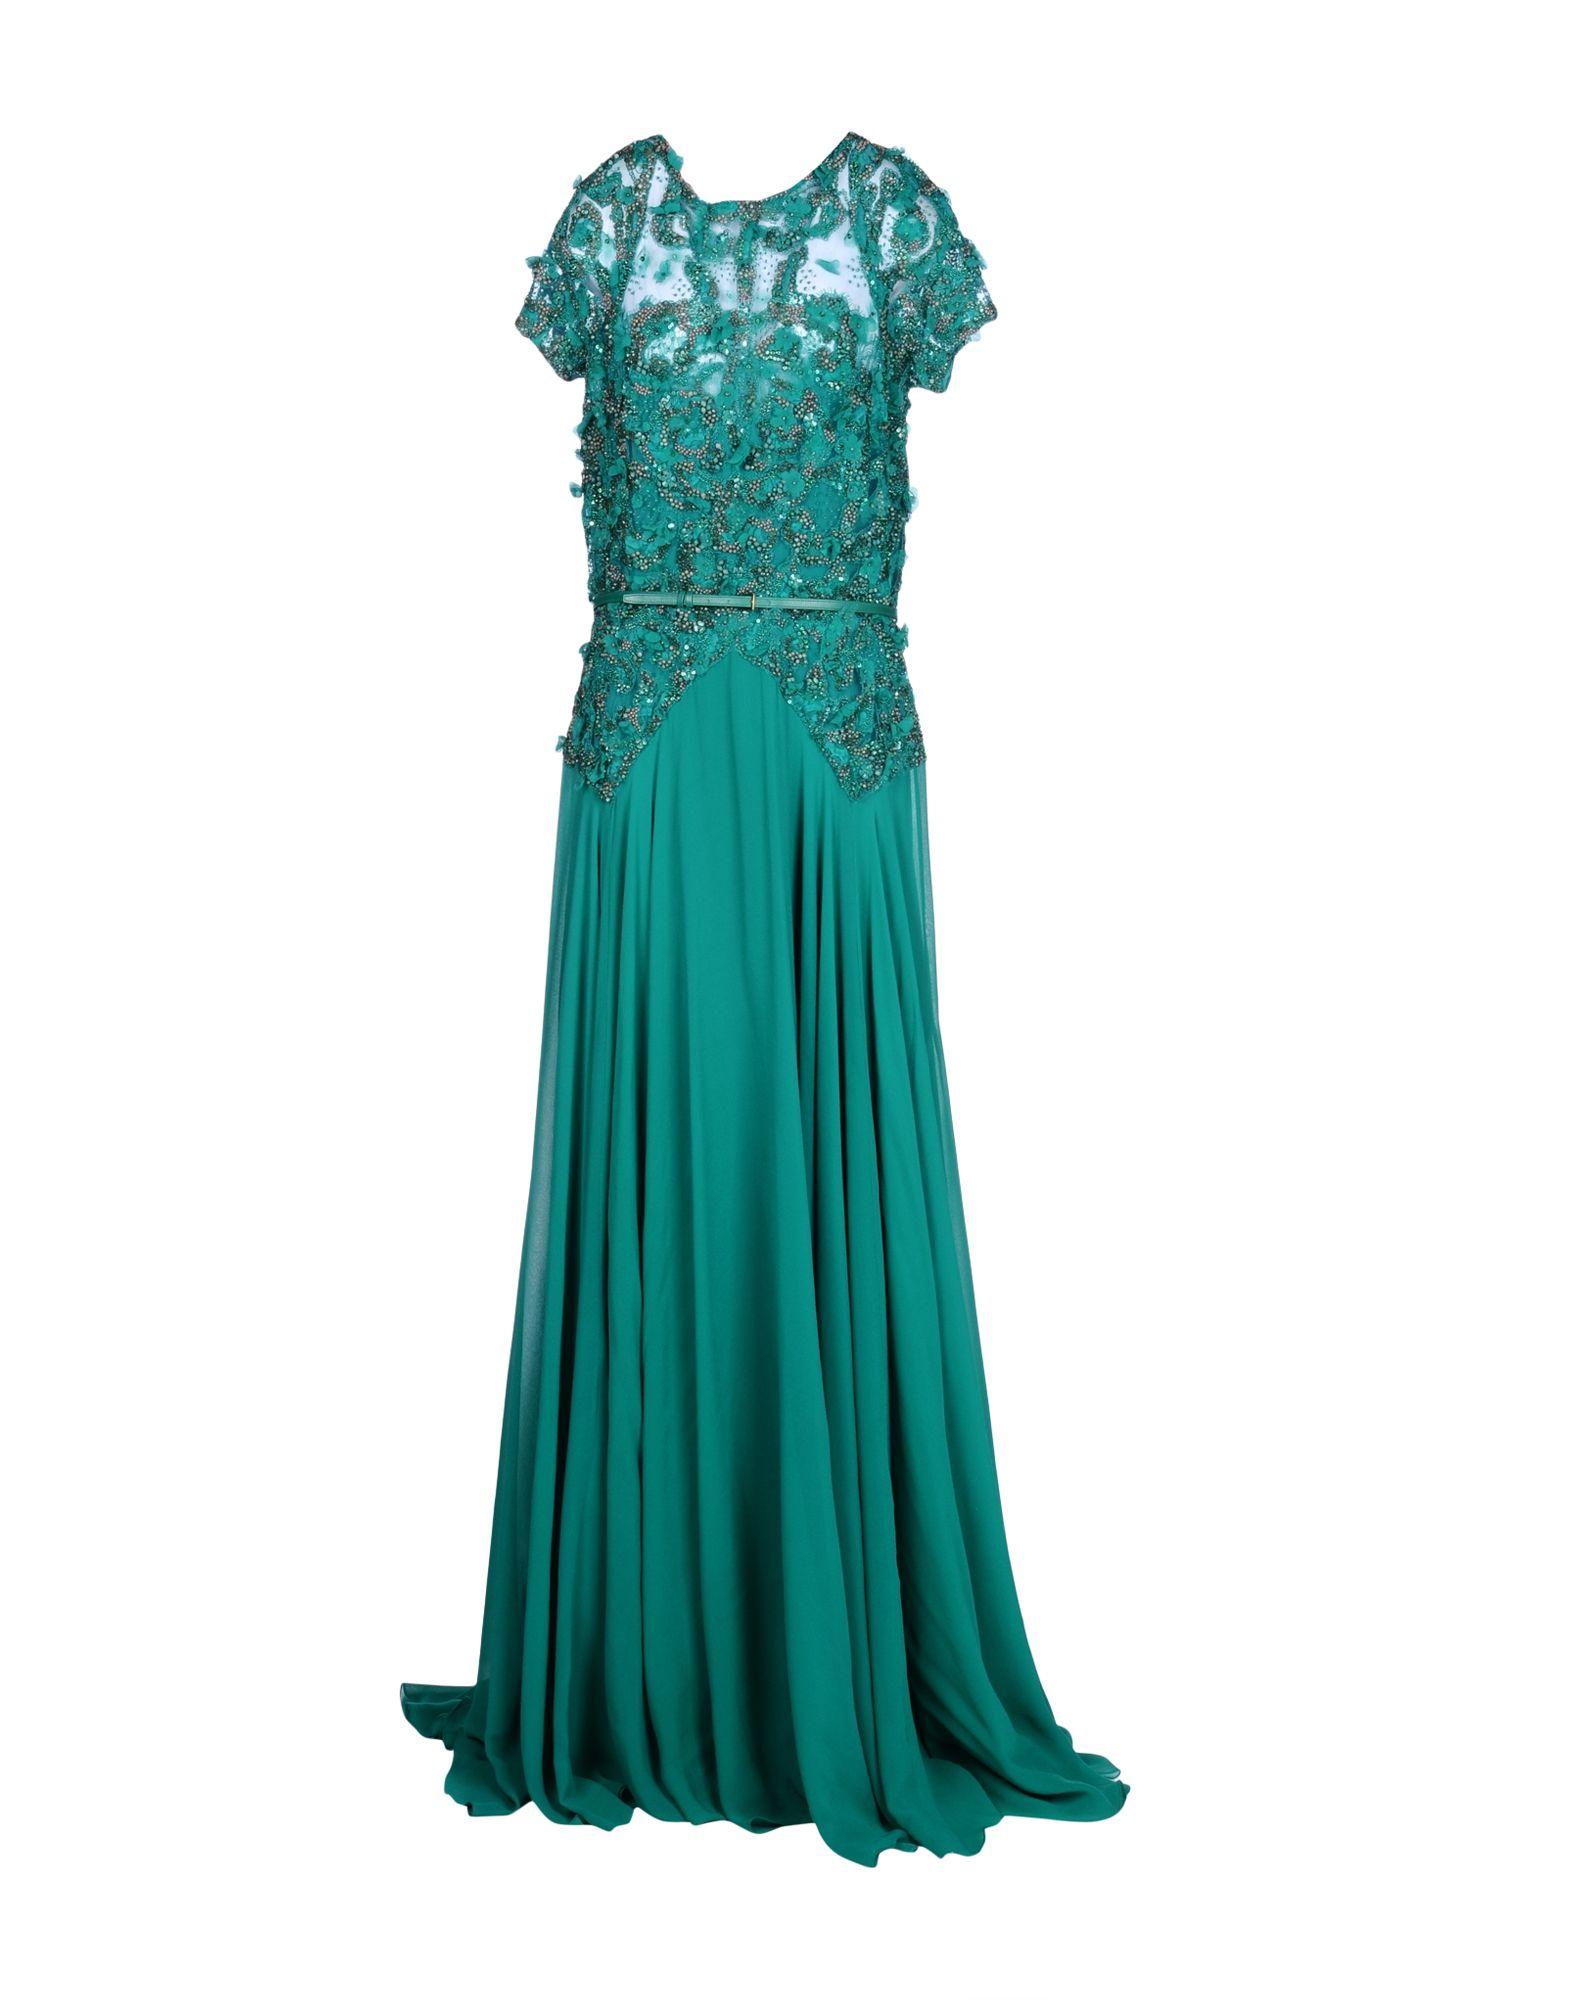 Elie Saab Lace Long Dress in Emerald Green (Green) - Lyst